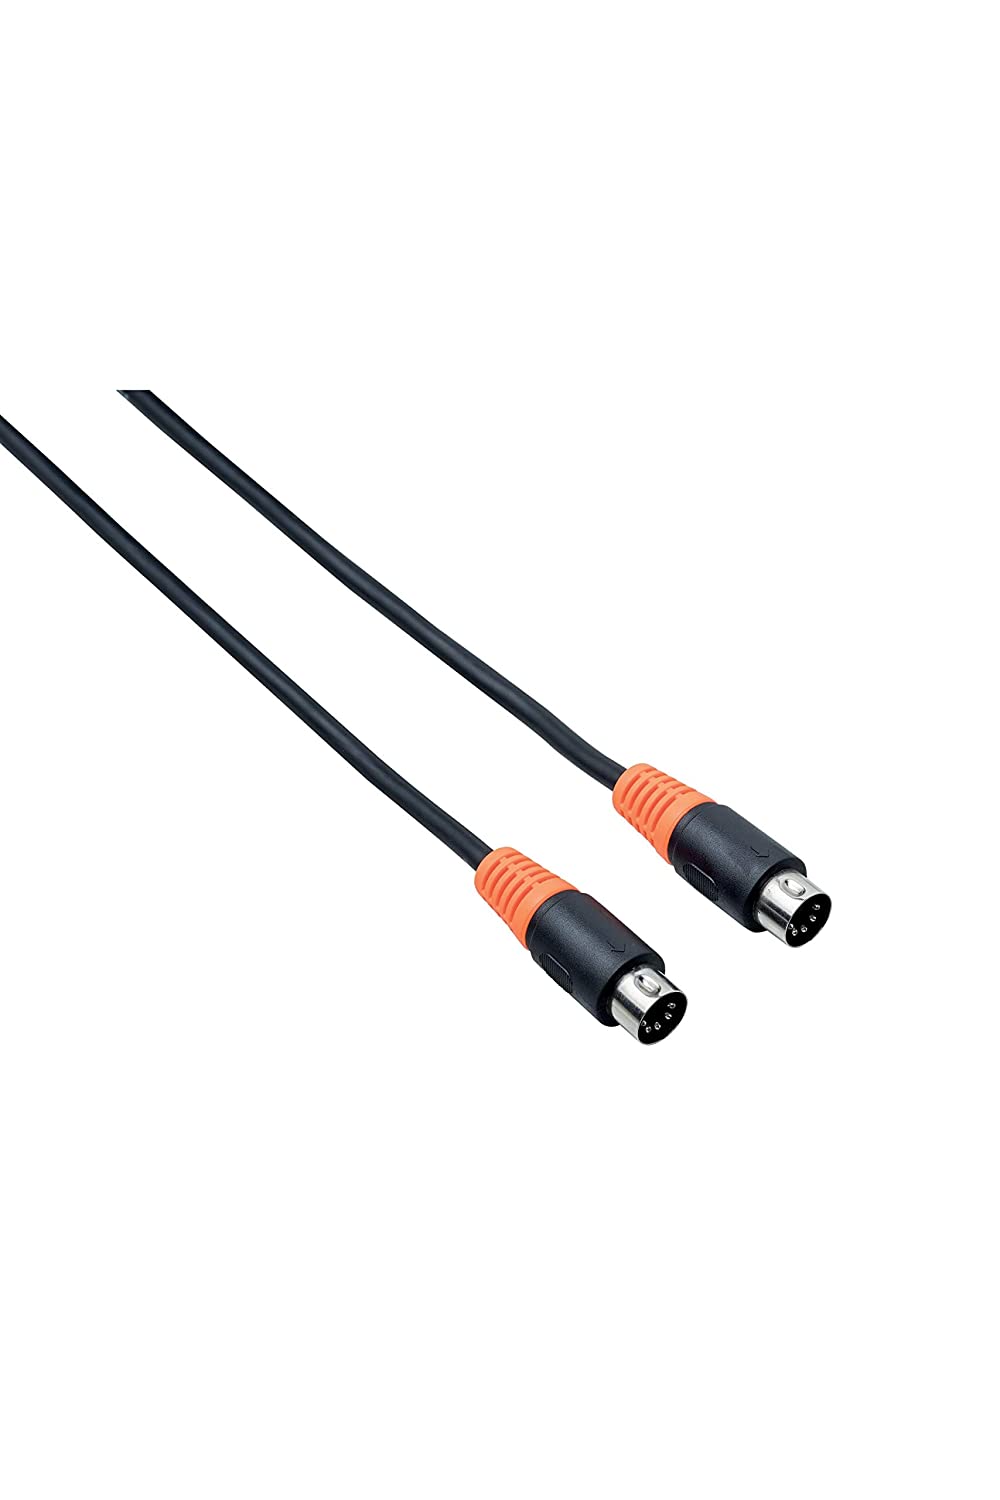 Bespeco SLMM300 3m Din Male MIDI Cable